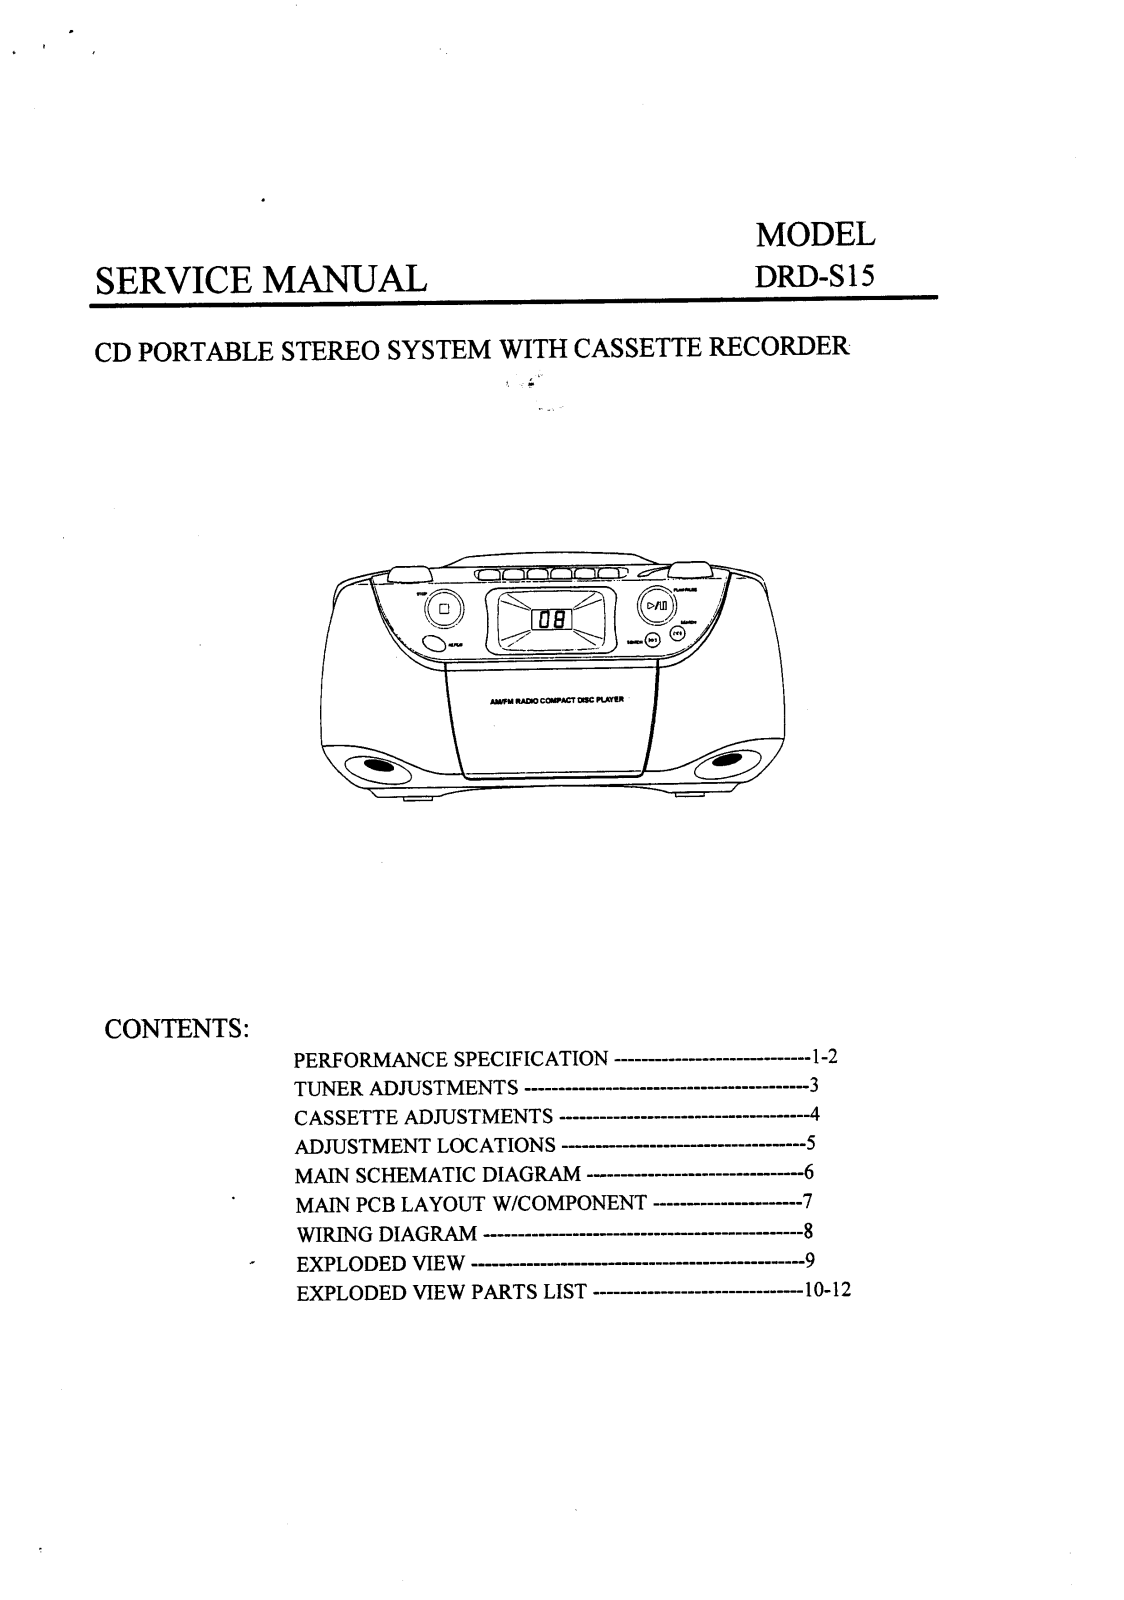 Daewoo DRD-S15 Service Manual